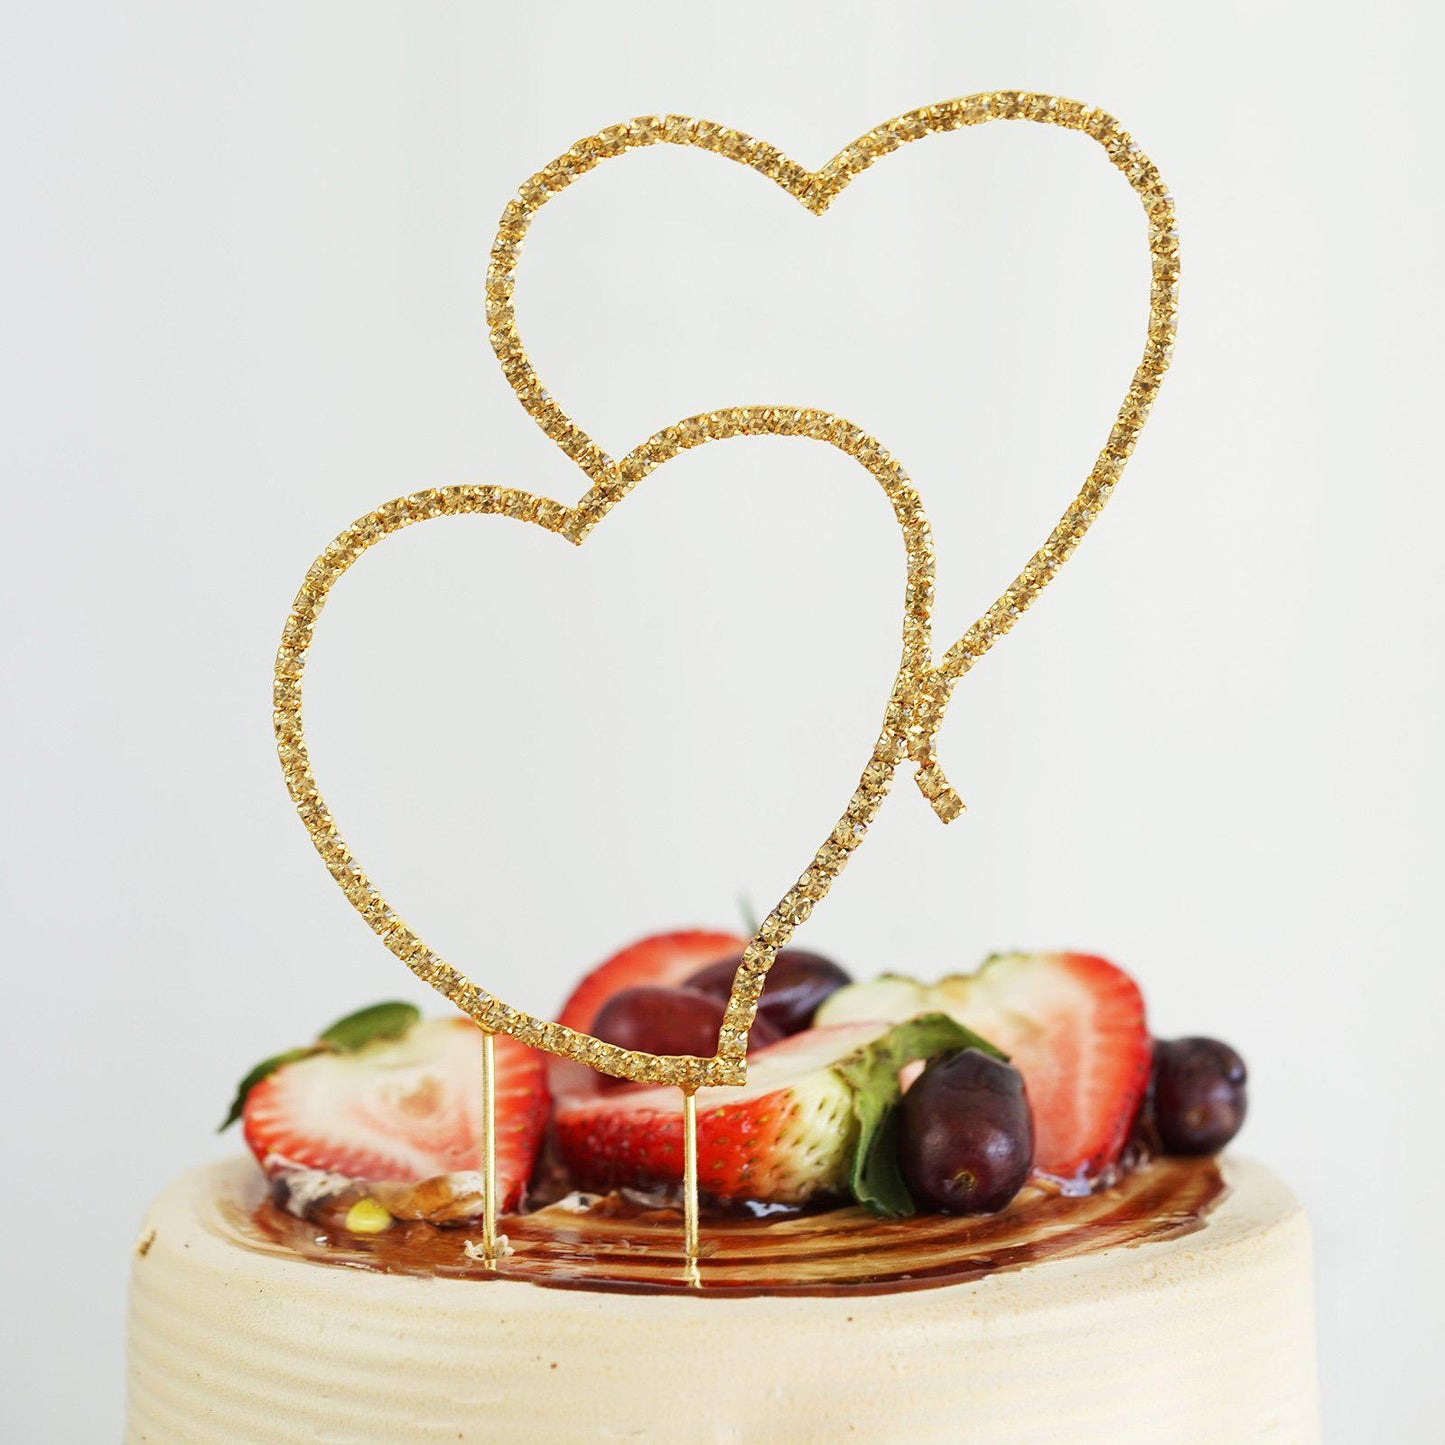 10" Gold Rhinestone Double Heart Cake Topper